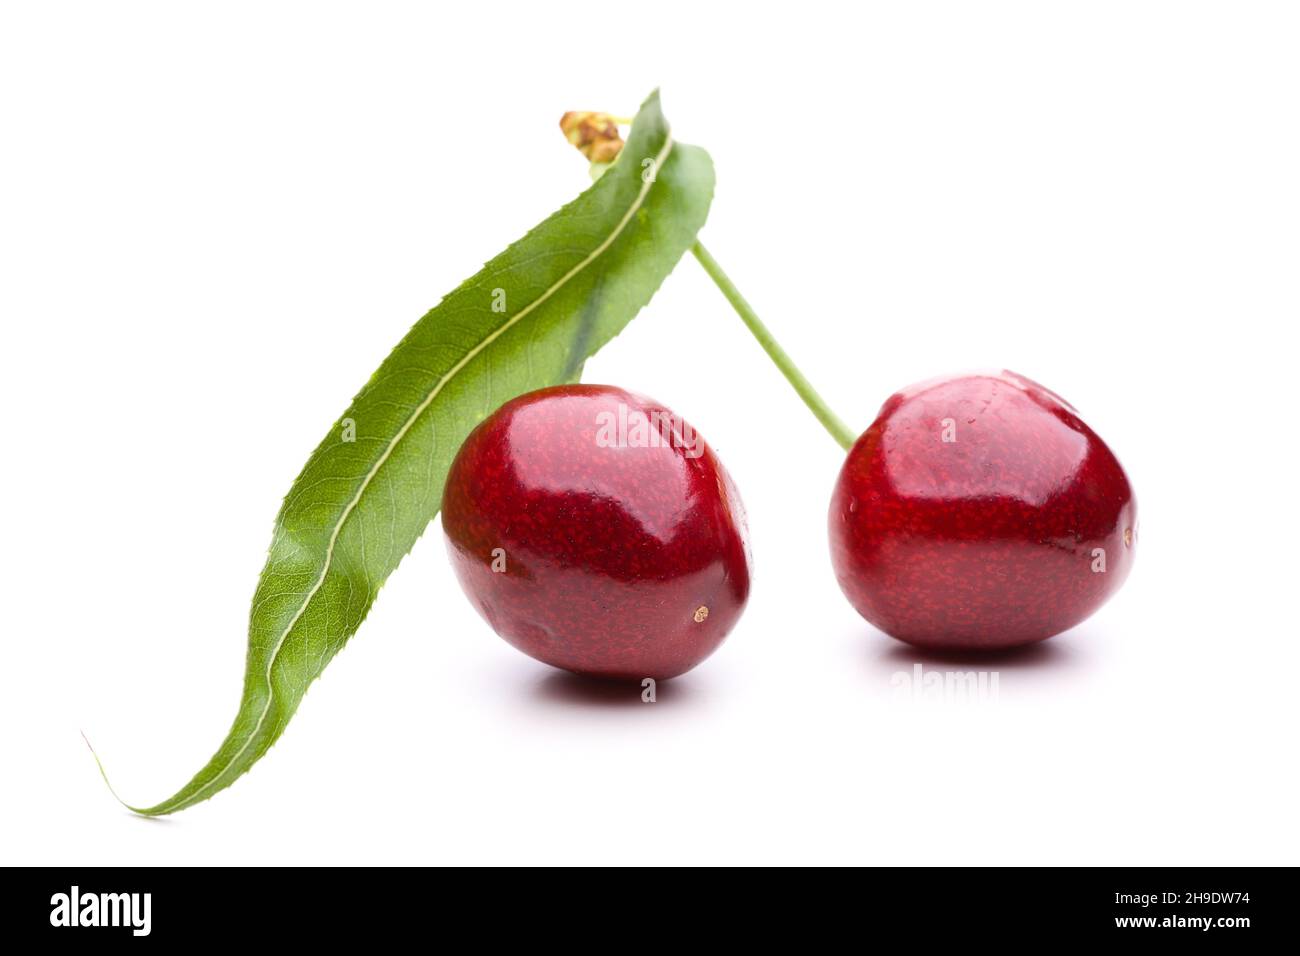 Cherry, cherries, whole, two, leaf, fruit, white, red, background, fresh, delicious, pure, round, white, shine, stone fruits, fruit, couple, sweet, fo Stock Photo